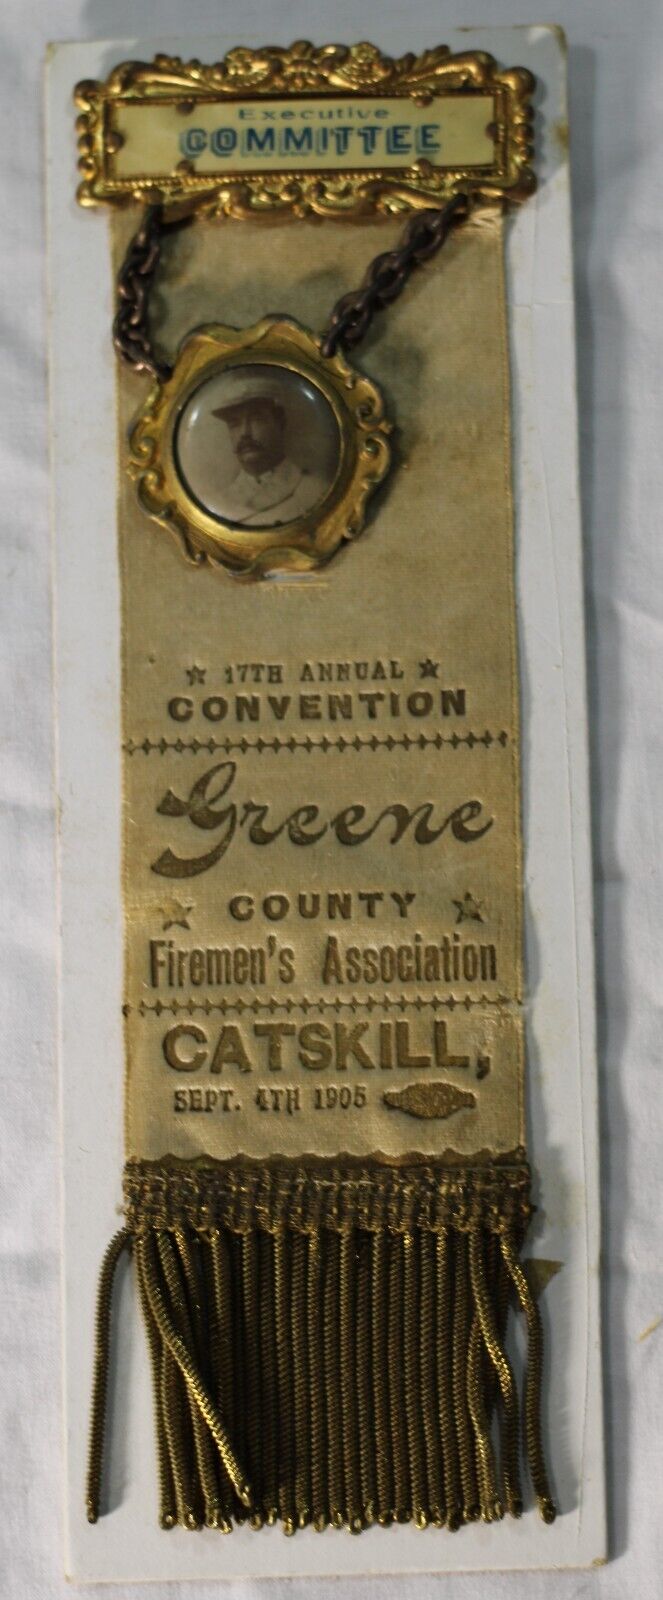 Vintage 1905 Firemen\'s Association Medal - Greene County Catskill Executive Comm